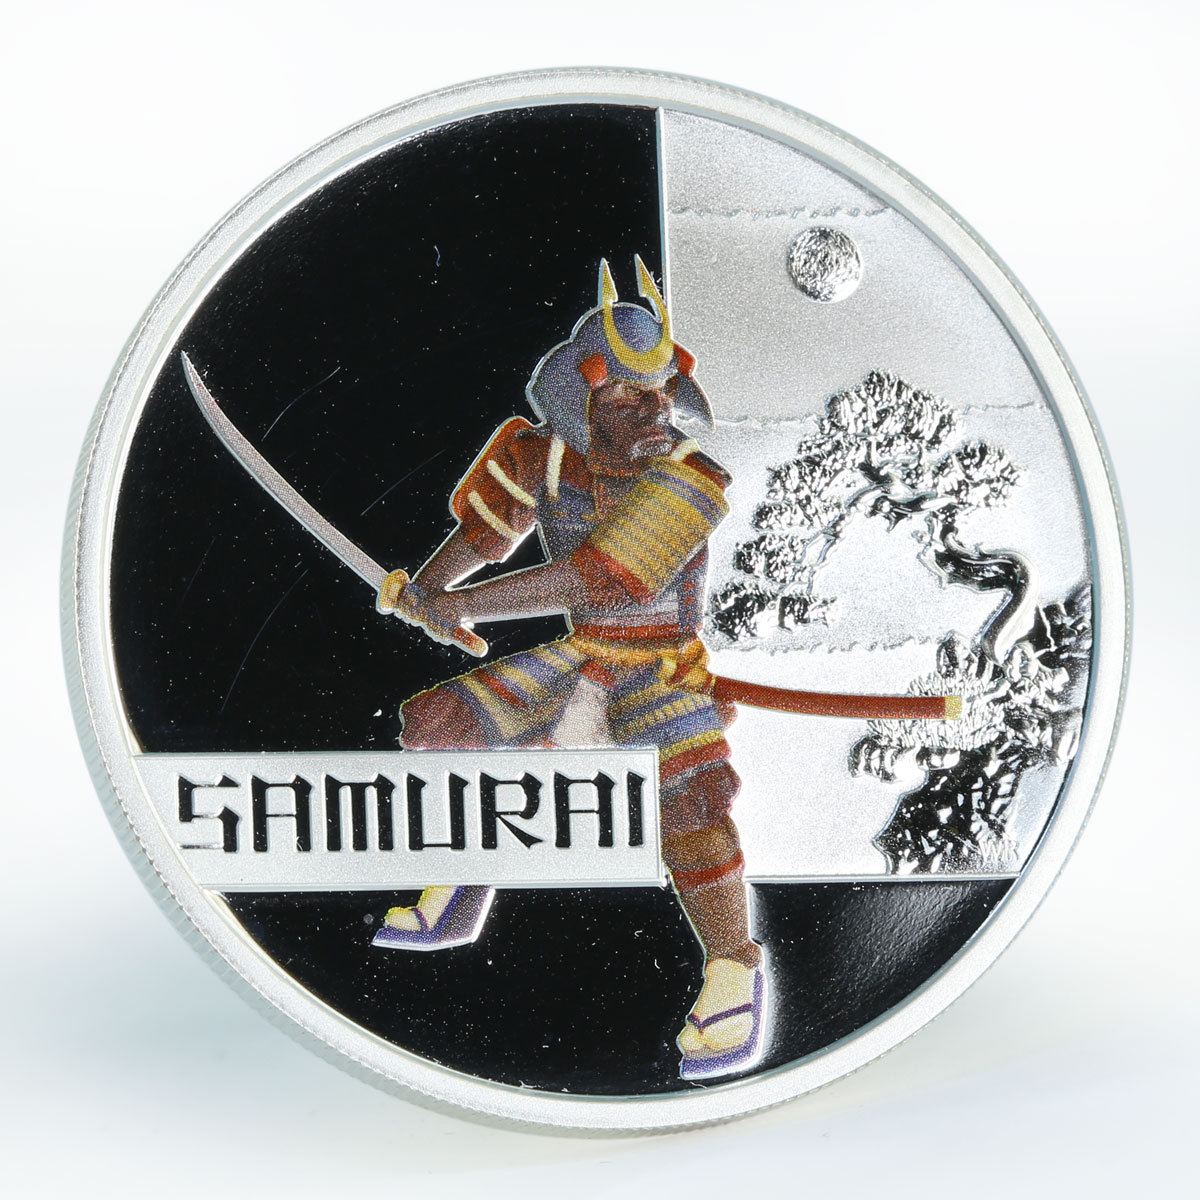 Tuvalu 1 dollar Great Warriors Samurai colored silver coin 2010